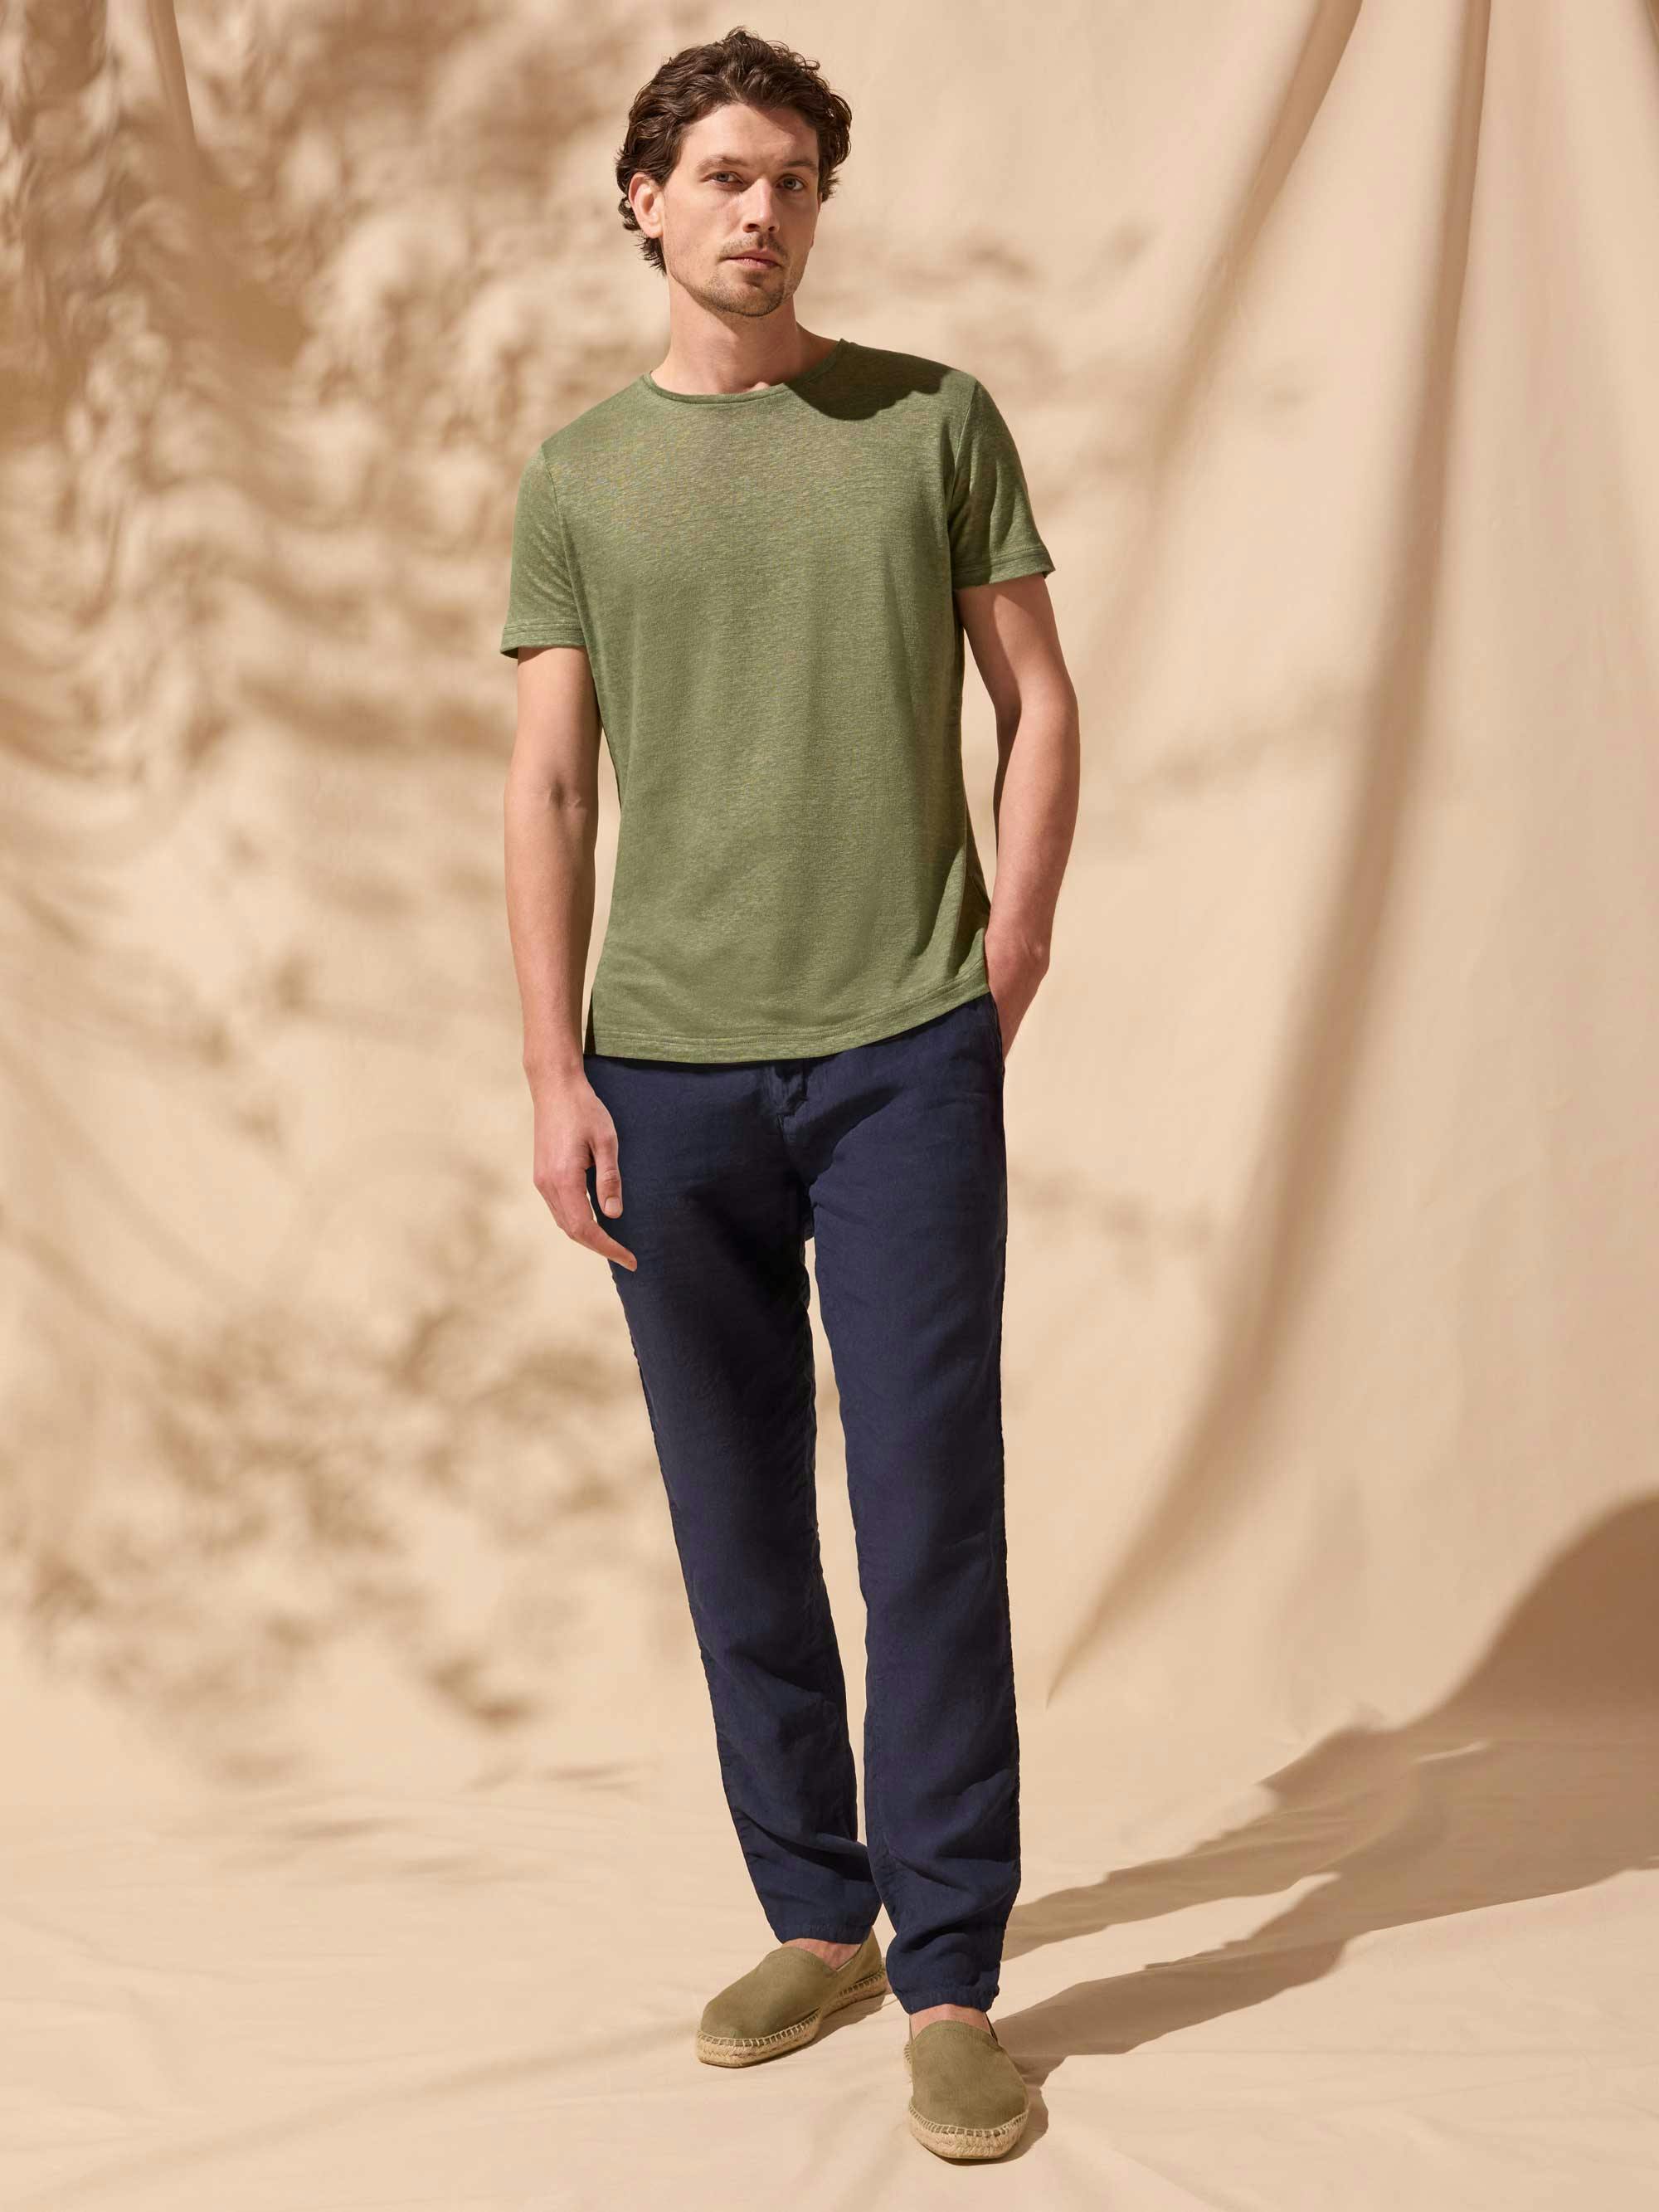 Luca Faloni Model Wearing Linen Jersey T-Shirt and Linen Trousers